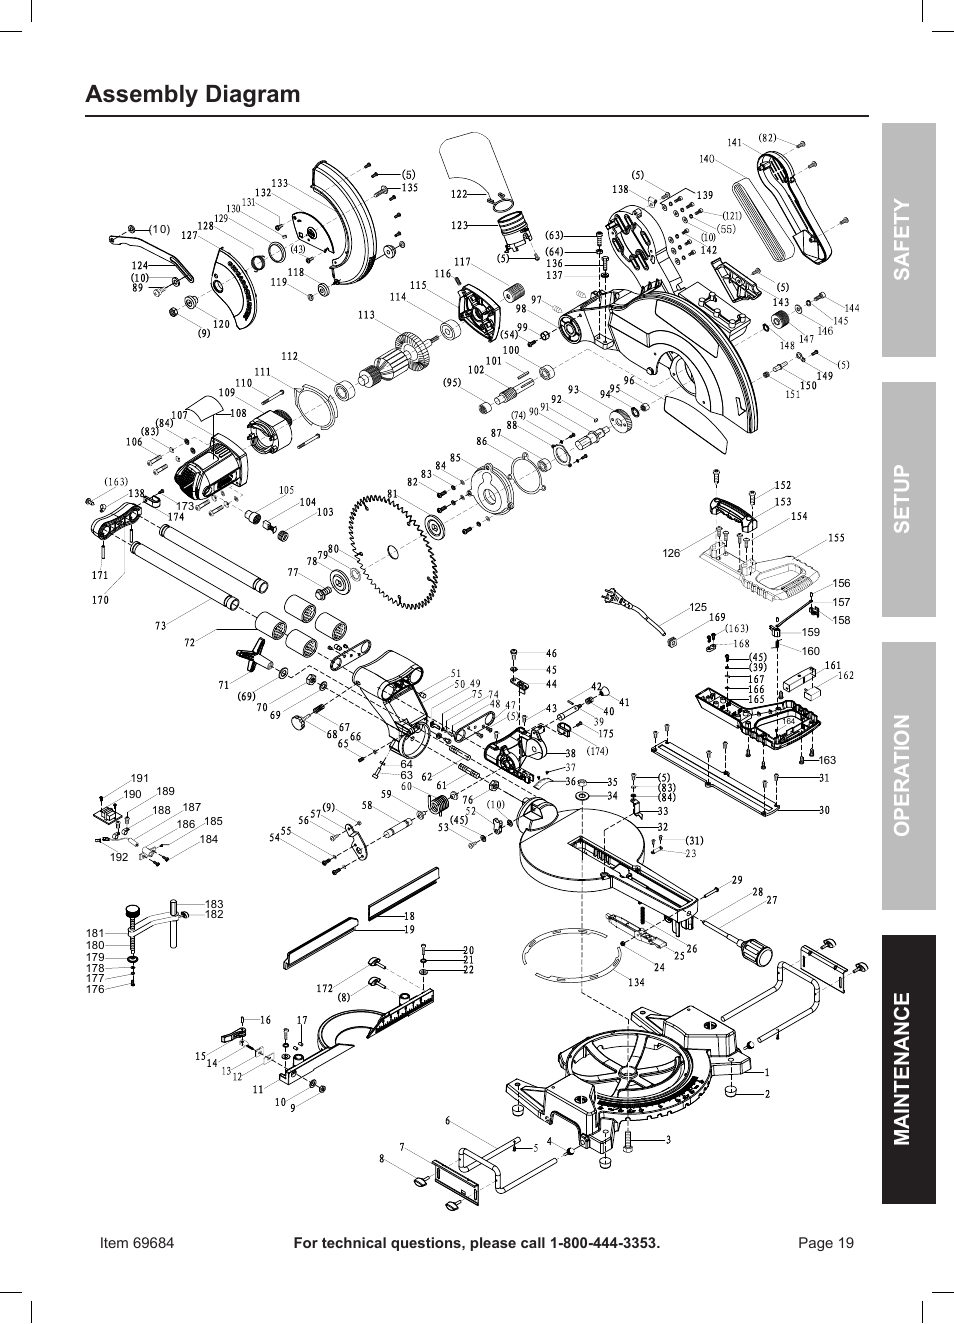 Assembly diagram, Safety opera tion maintenance setup | Chicago